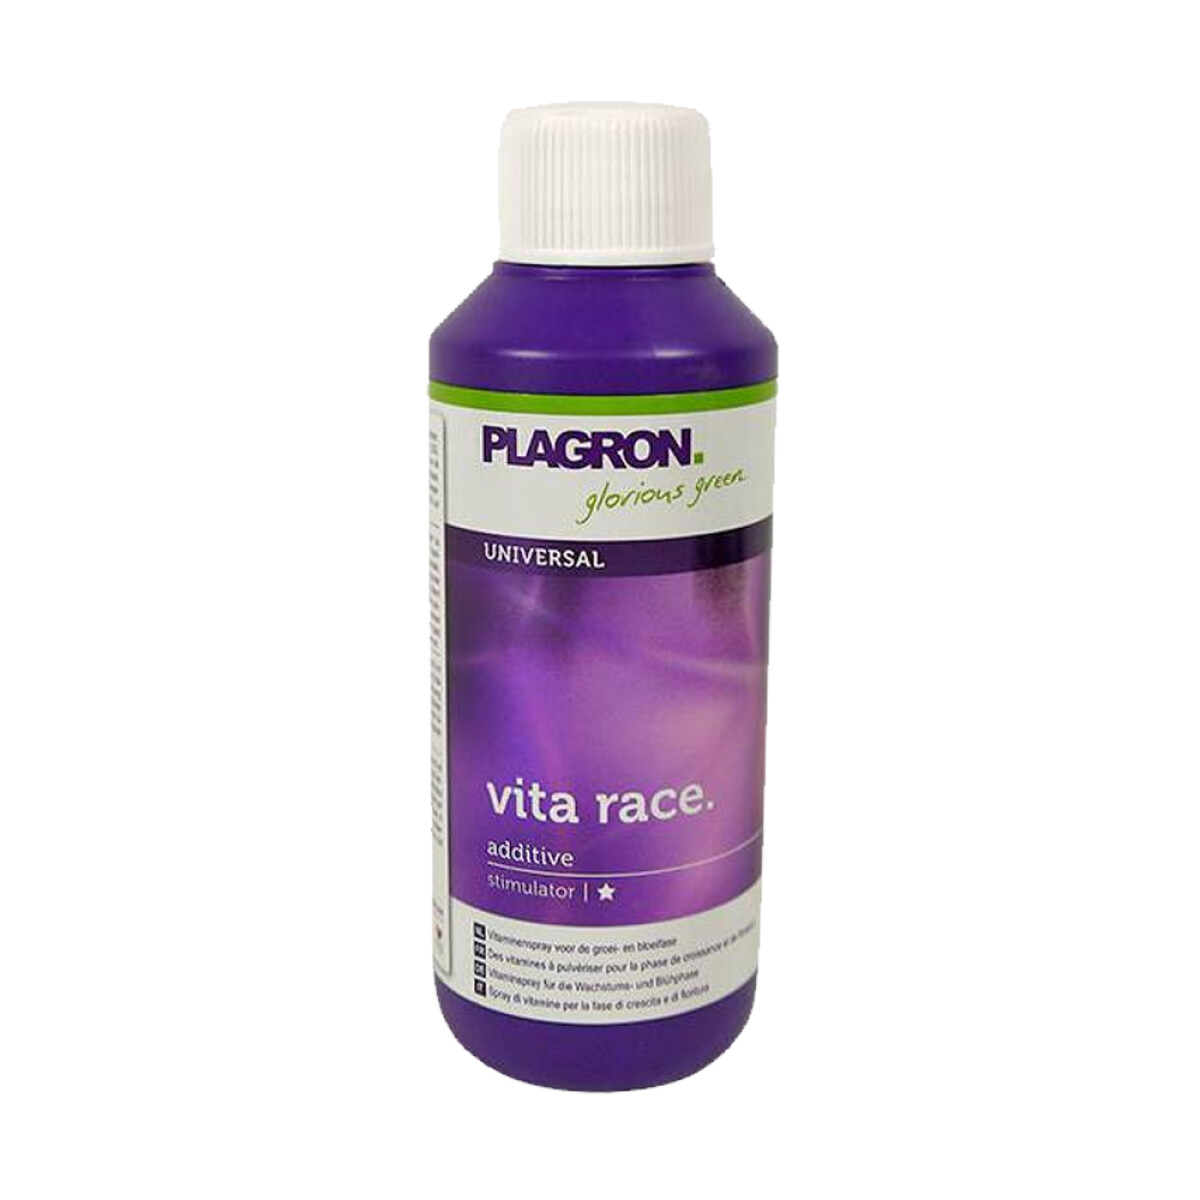 VITA RACE PLAGRON - 100ML 